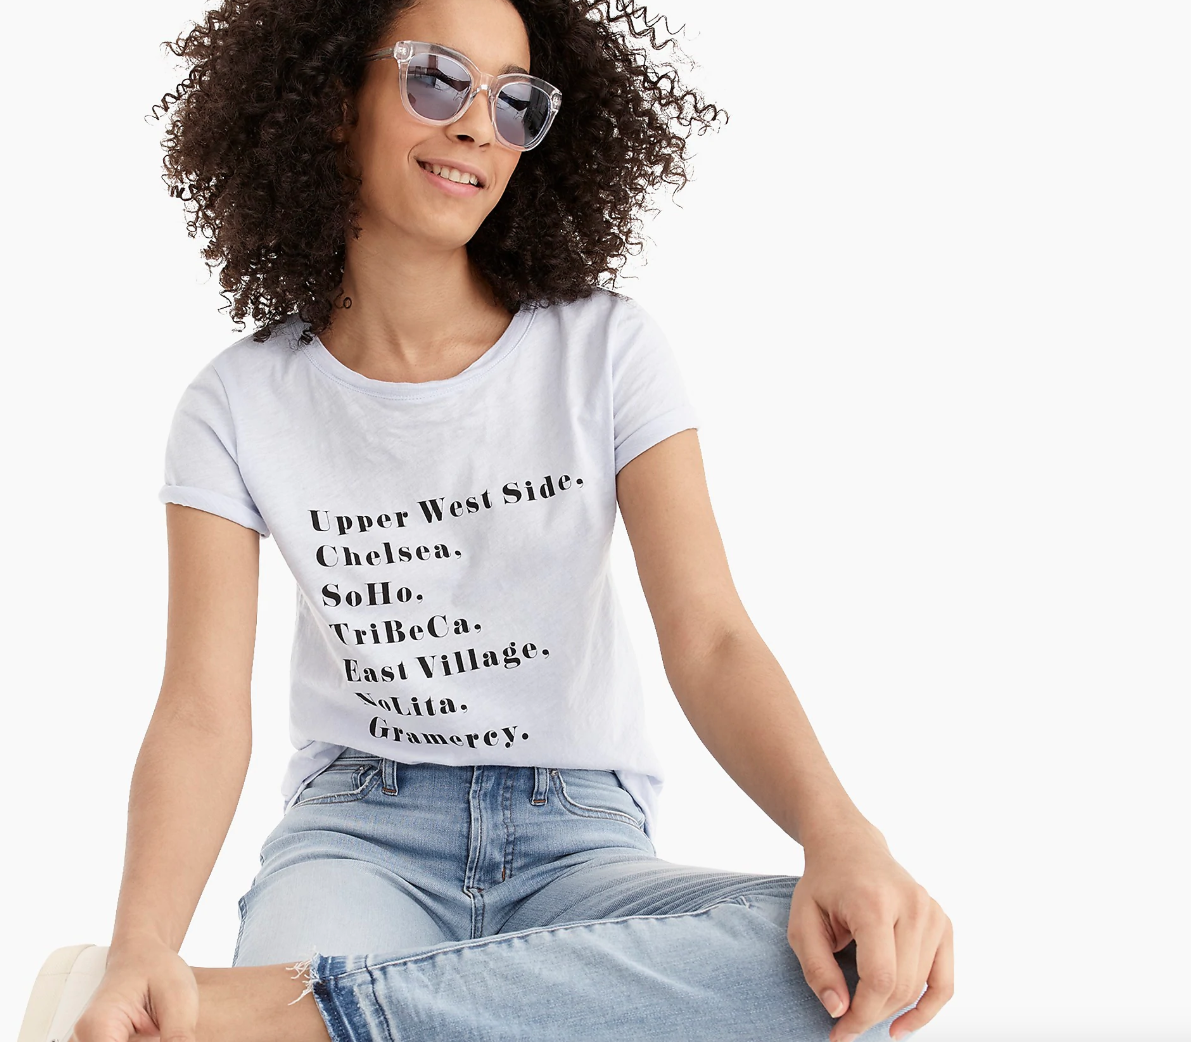 Camilla Atkins, CATKINS DESIGN for J. Crew Spring 2019, New york neighborhoods  screen printed tee shirt- women's apparel.png